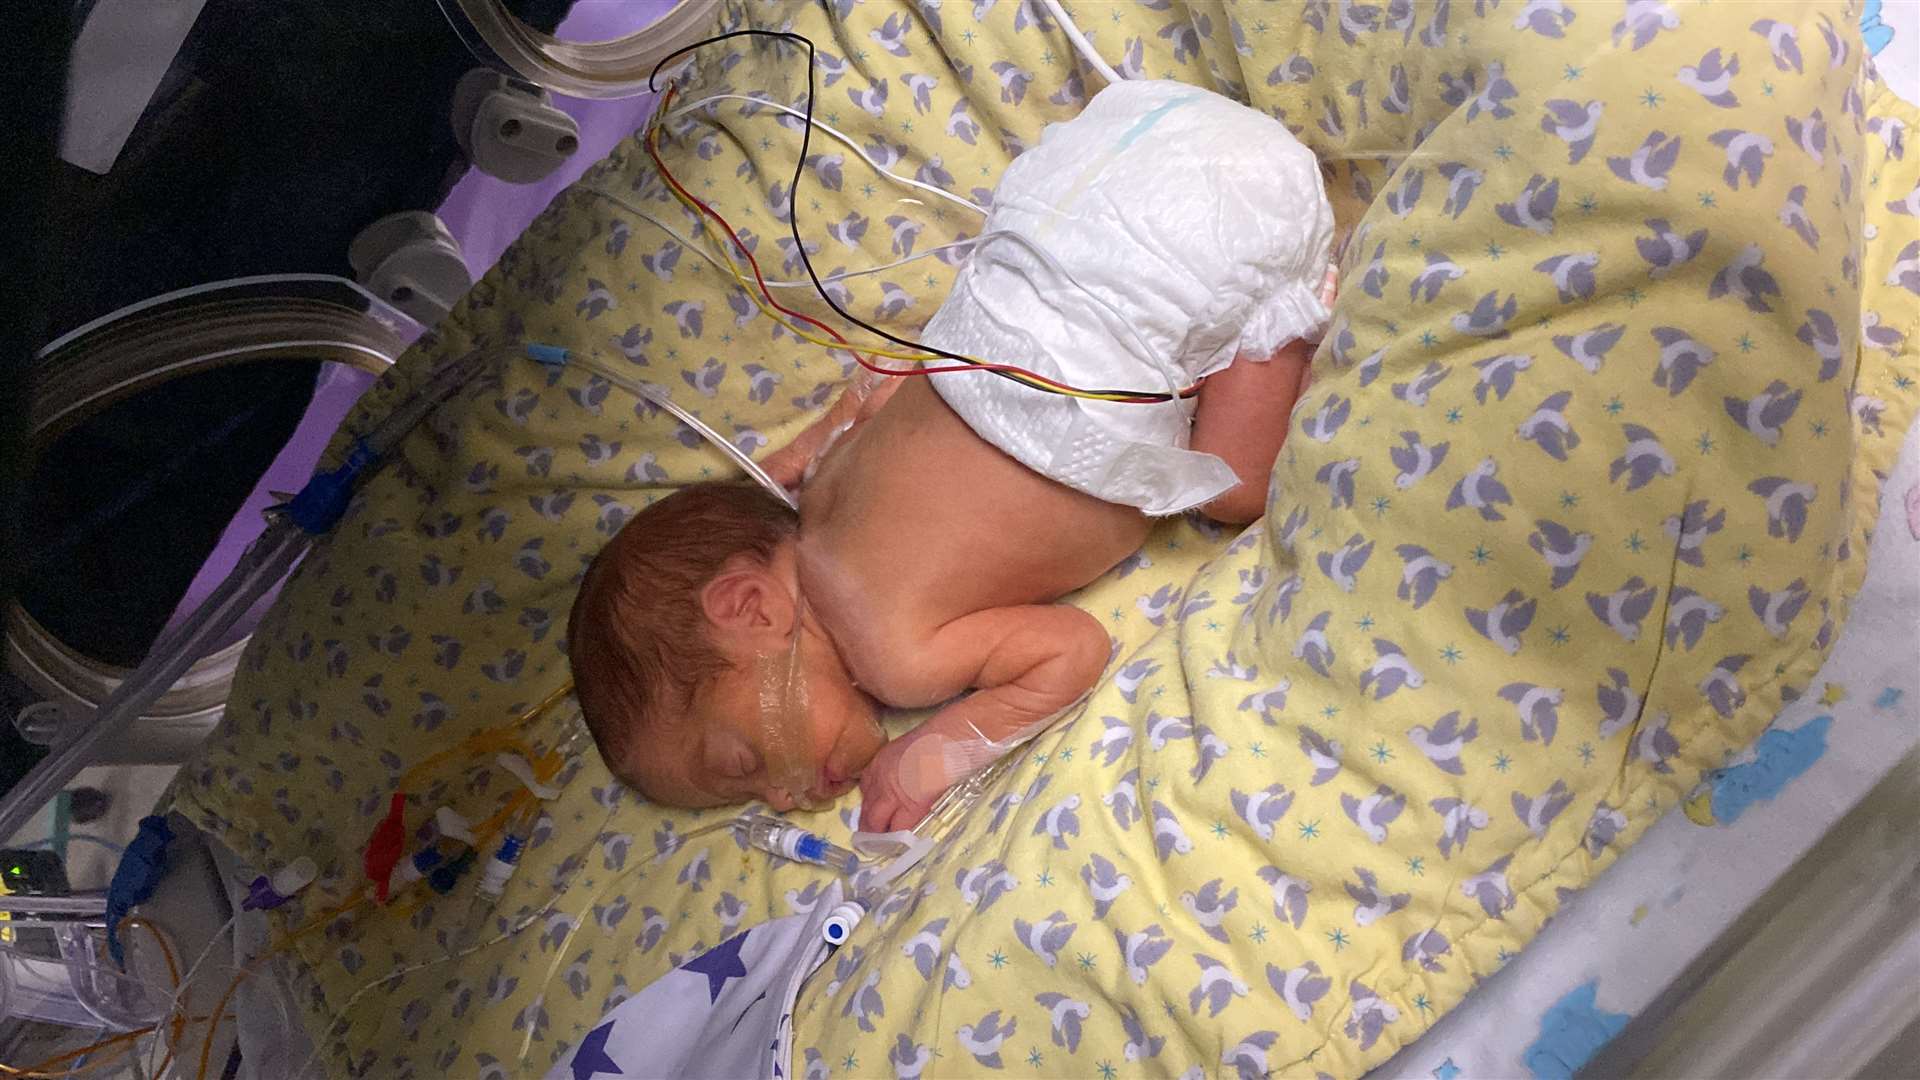 Little Annayah in the neonatal unit